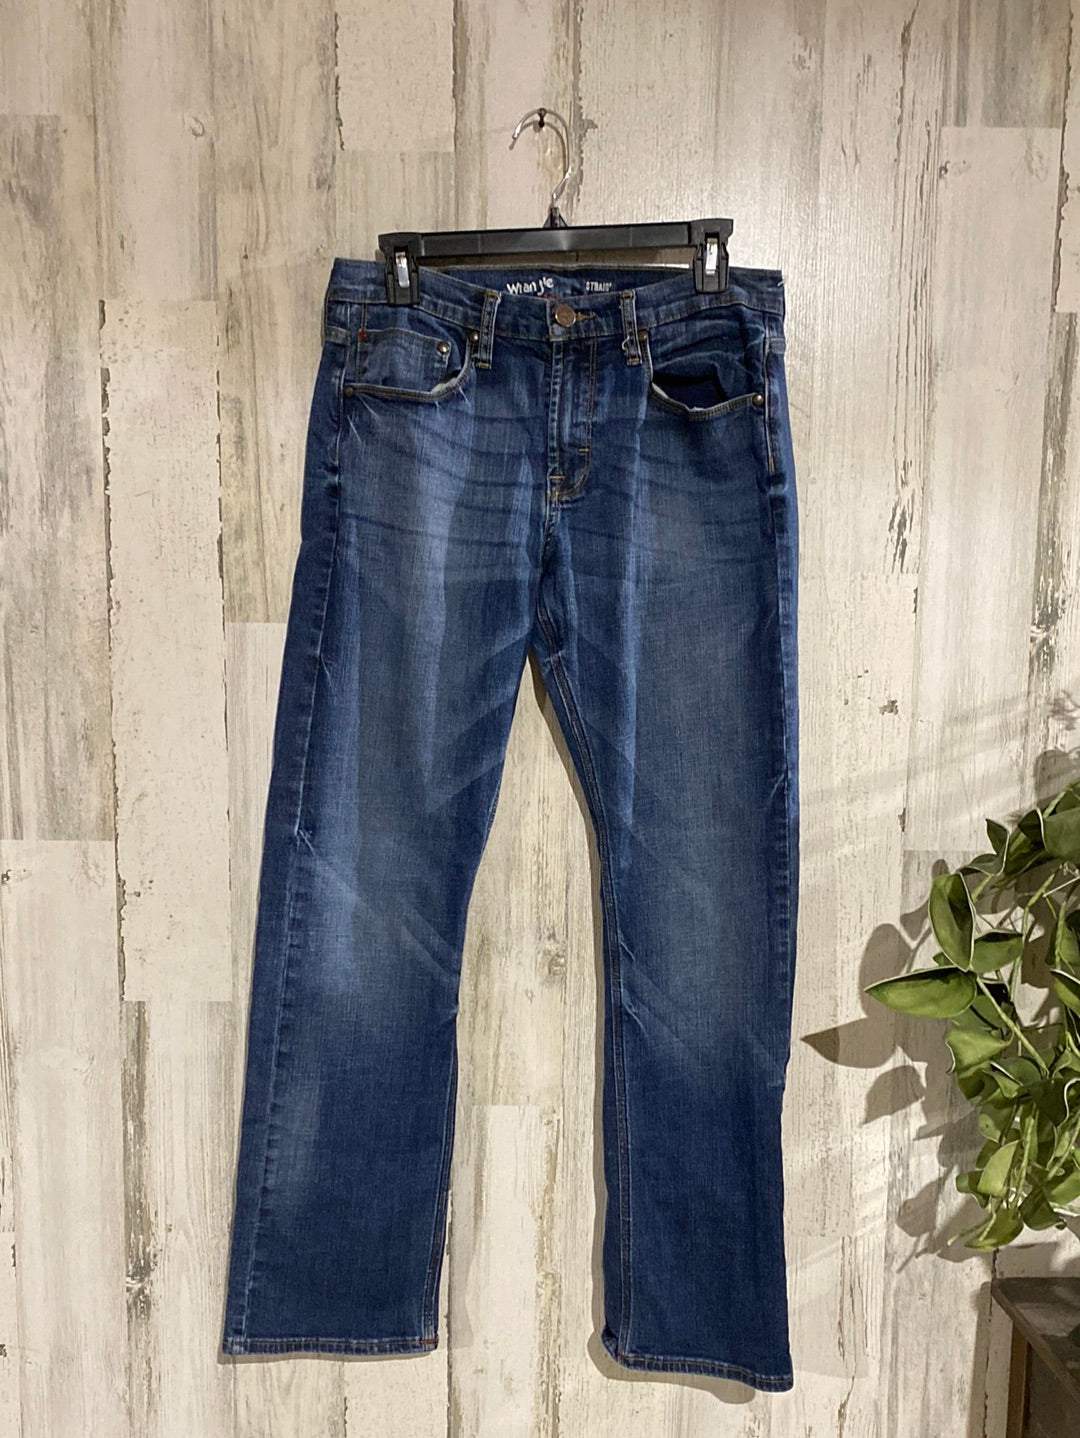 Men's Wrangler Jeans 30x30